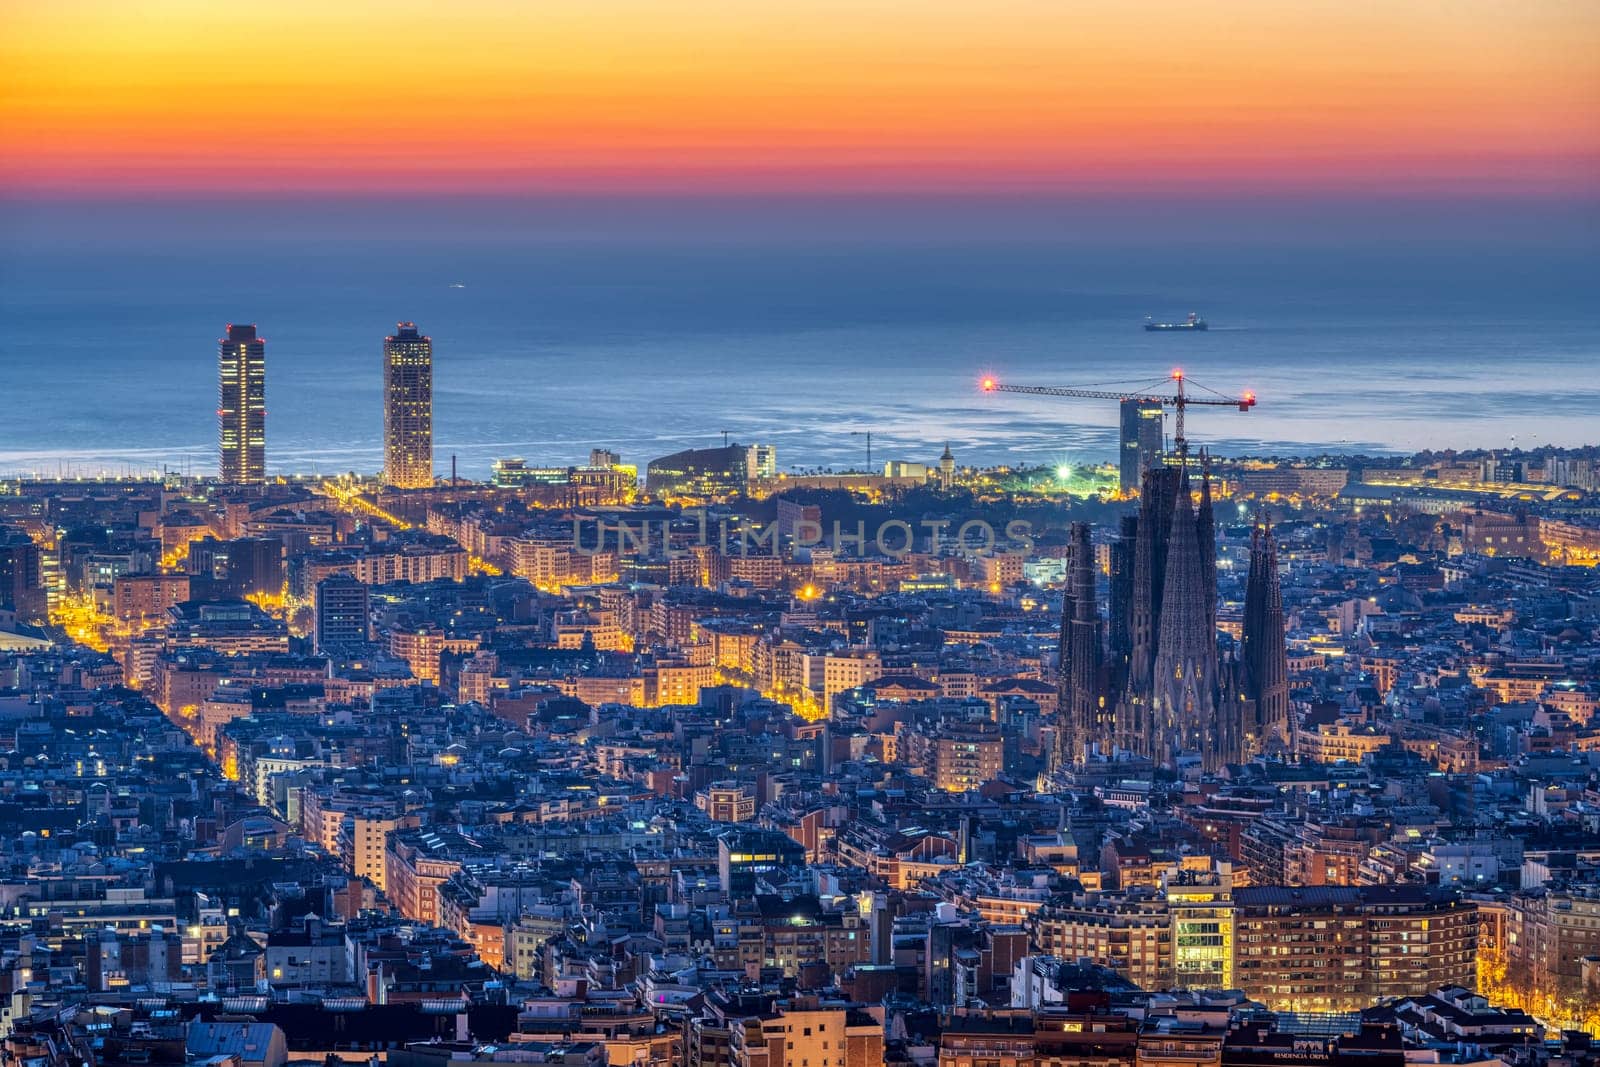 The skyline of Barcelona with the famous Sagrada Familia by elxeneize